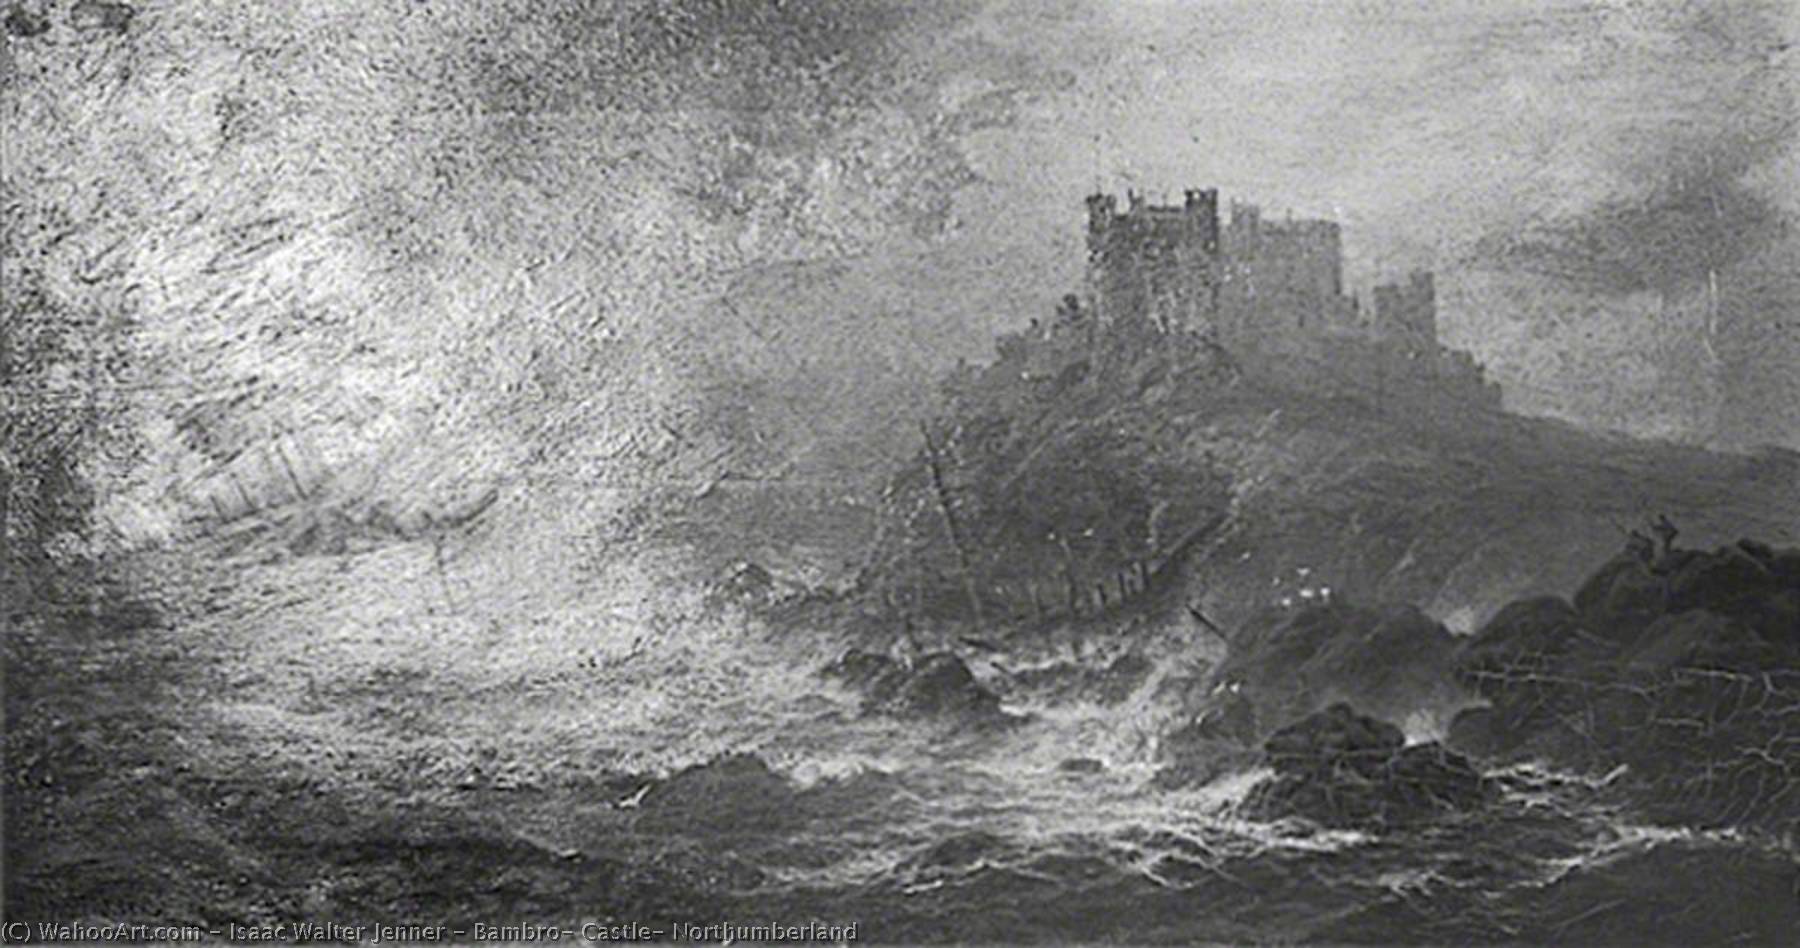 WikiOO.org - Encyclopedia of Fine Arts - Maleri, Artwork Isaac Walter Jenner - Bambro' Castle, Northumberland